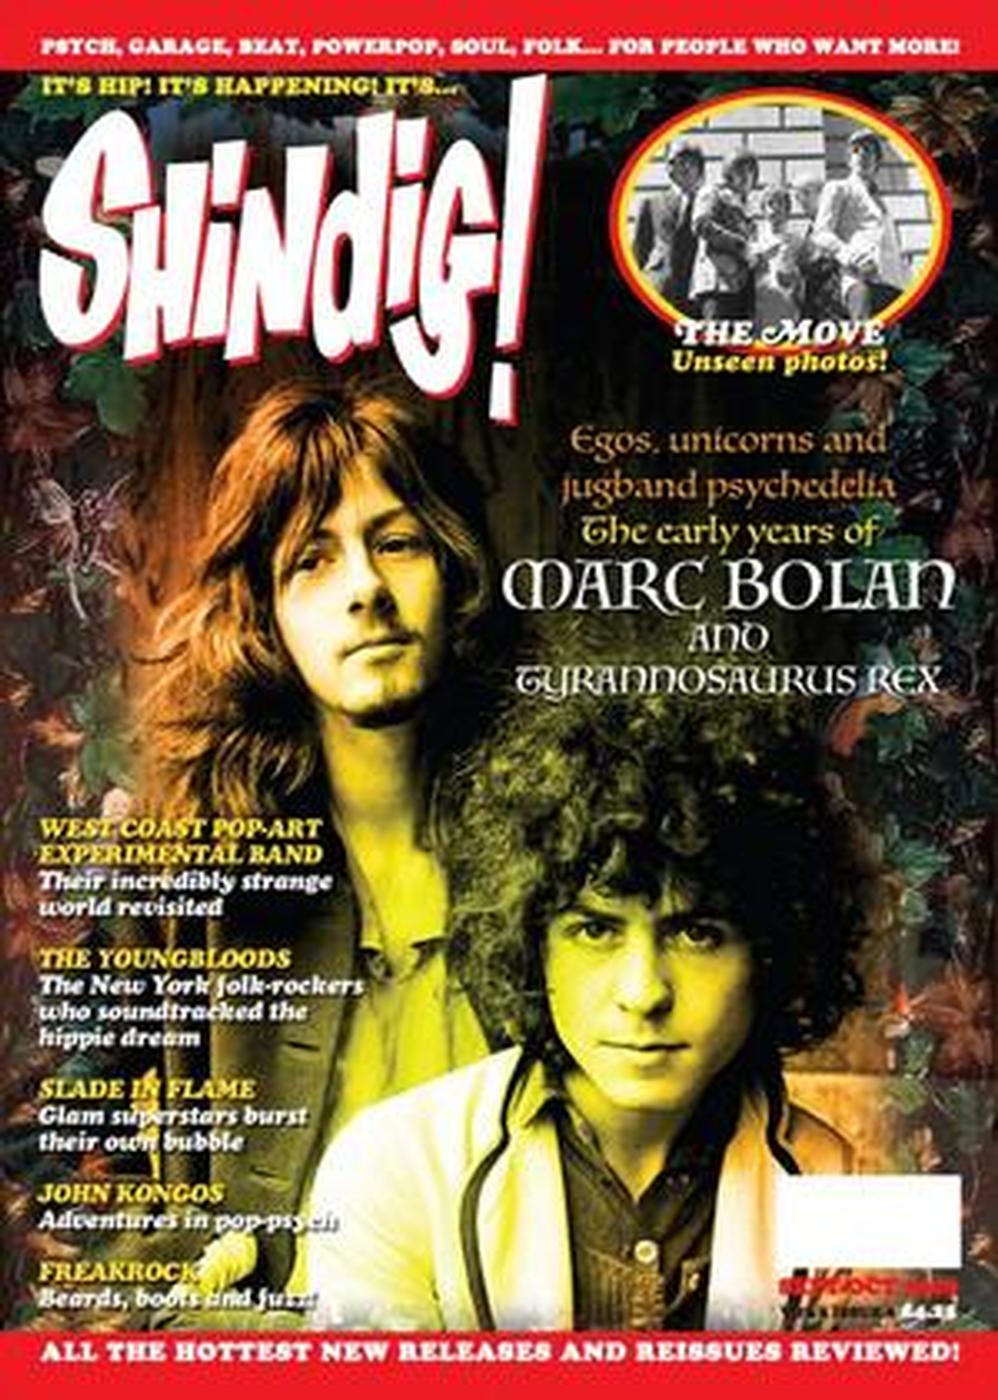 + SHINDIG! MAGAZINE - Volume 2 Issue 6 Marc Bolan